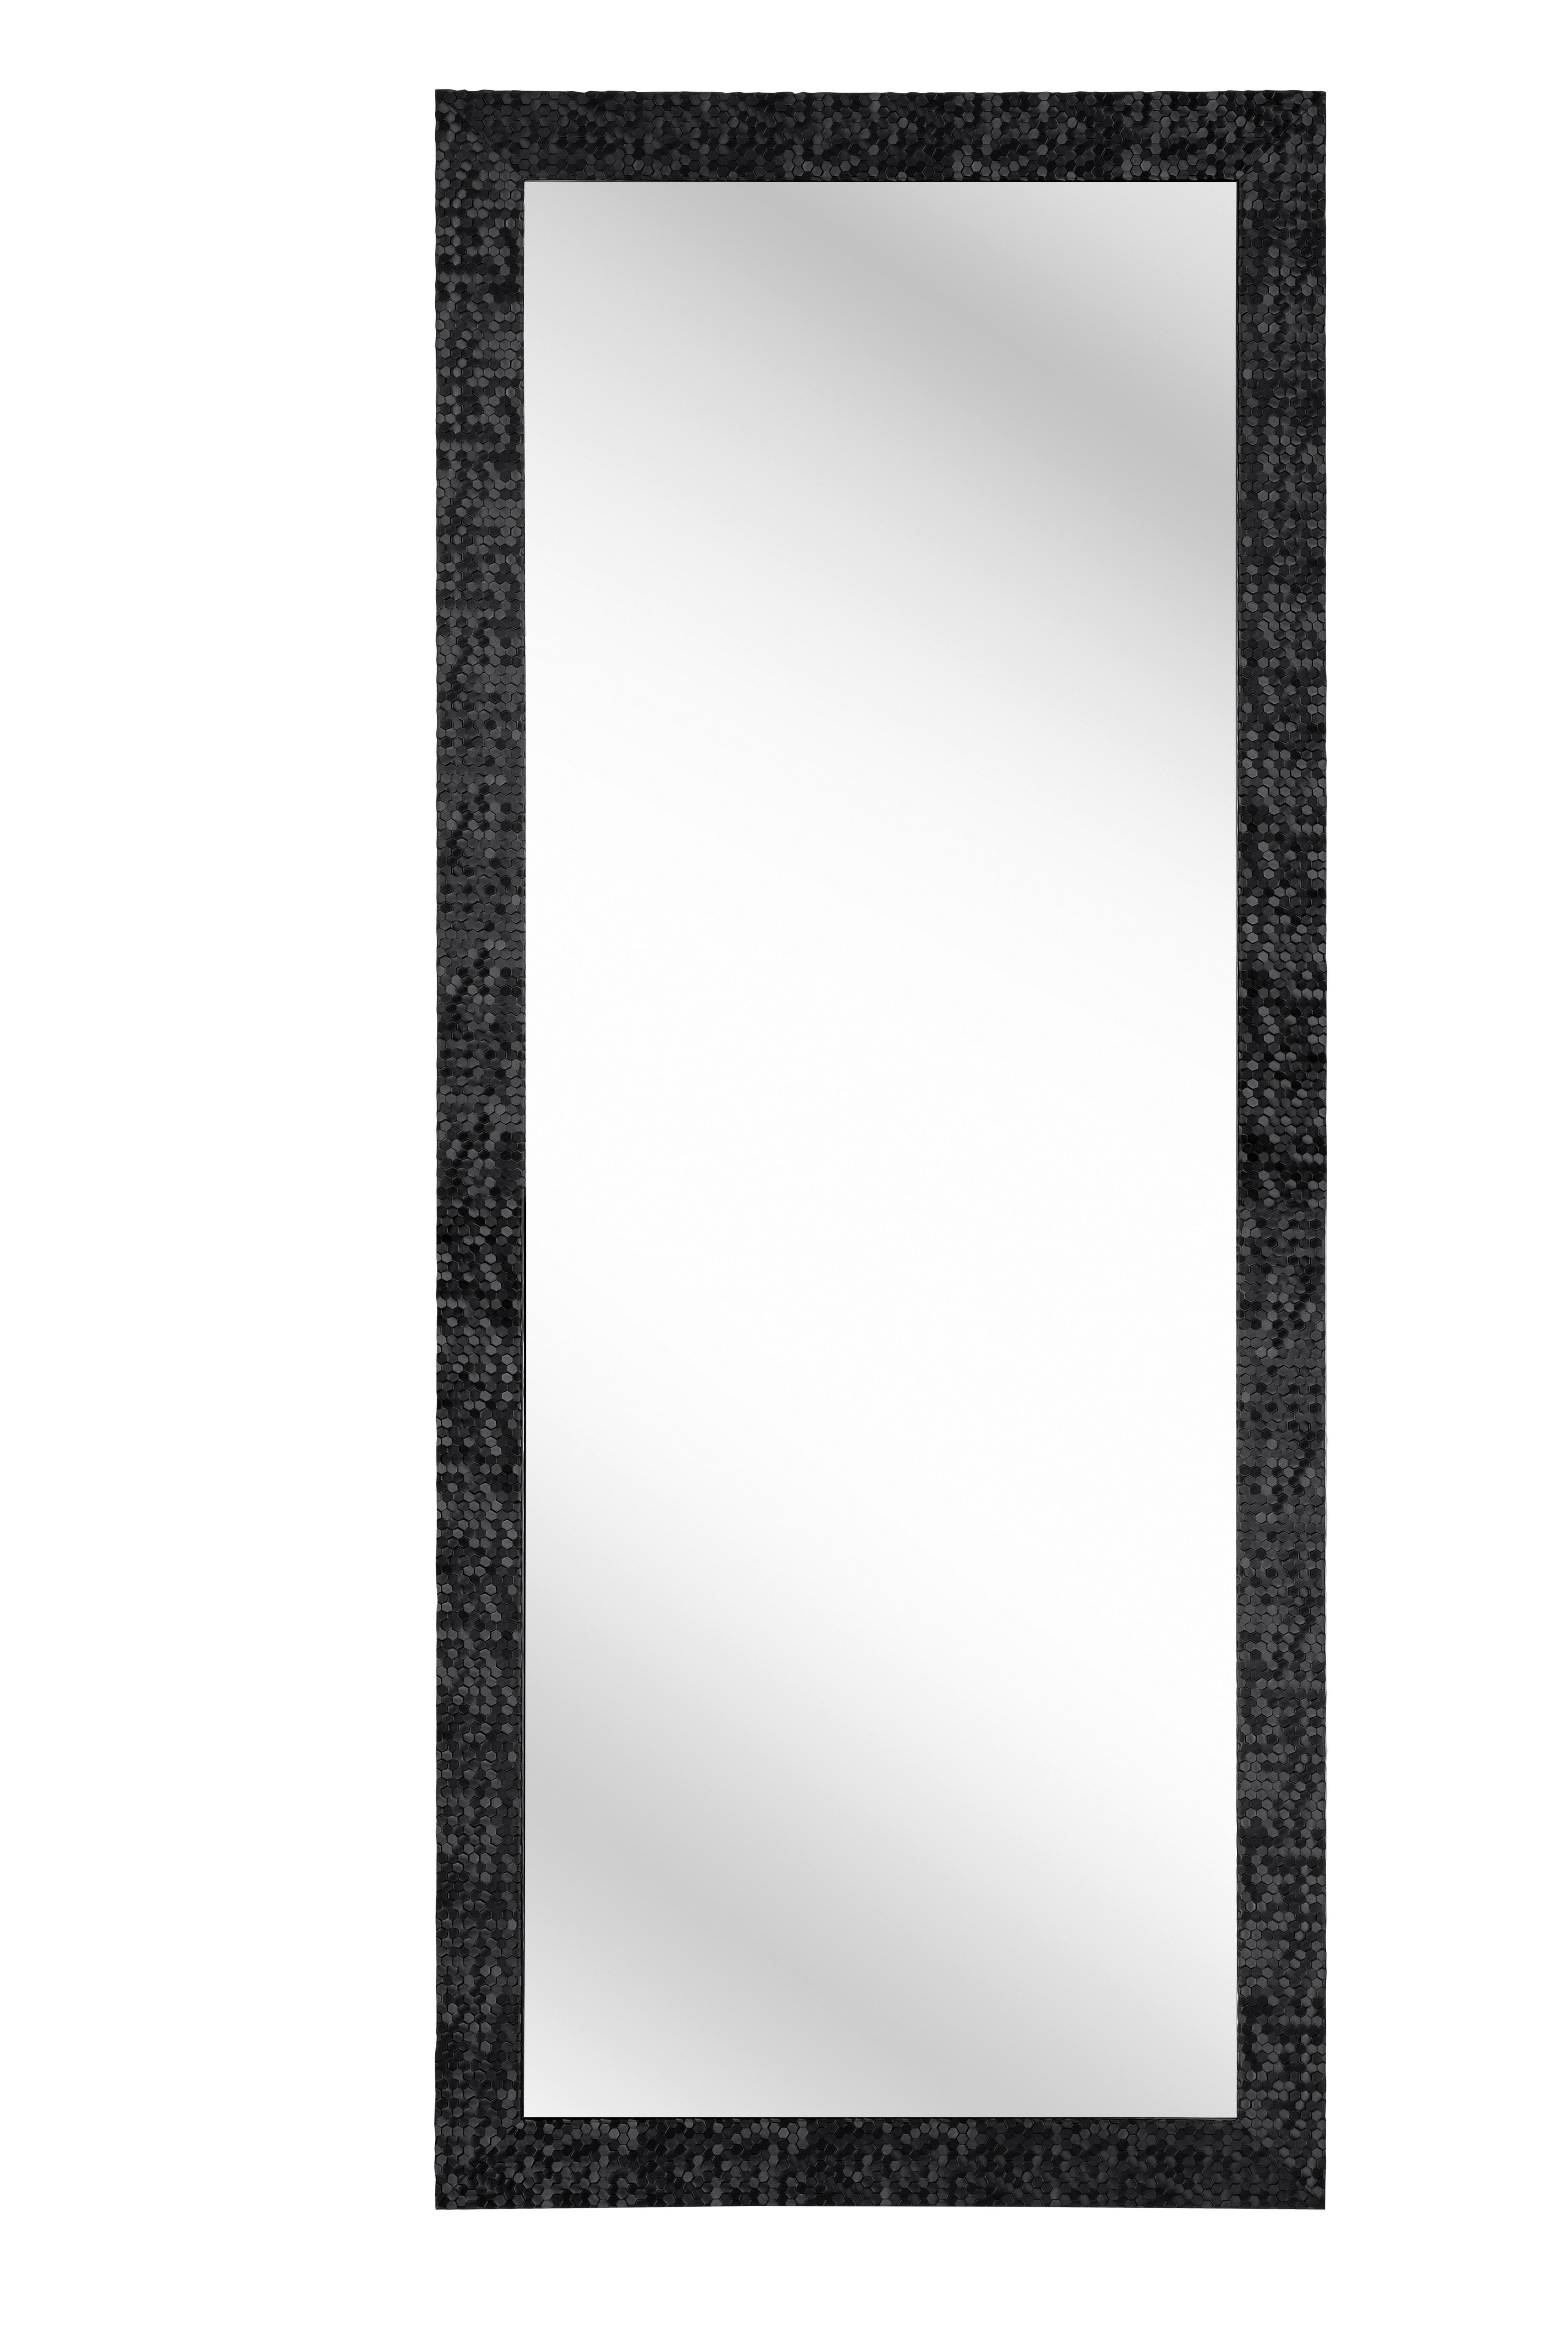 WANDSPIEGEL 70/170/2 cm    - Schwarz, LIFESTYLE, Glas/Kunststoff (70/170/2cm) - Carryhome